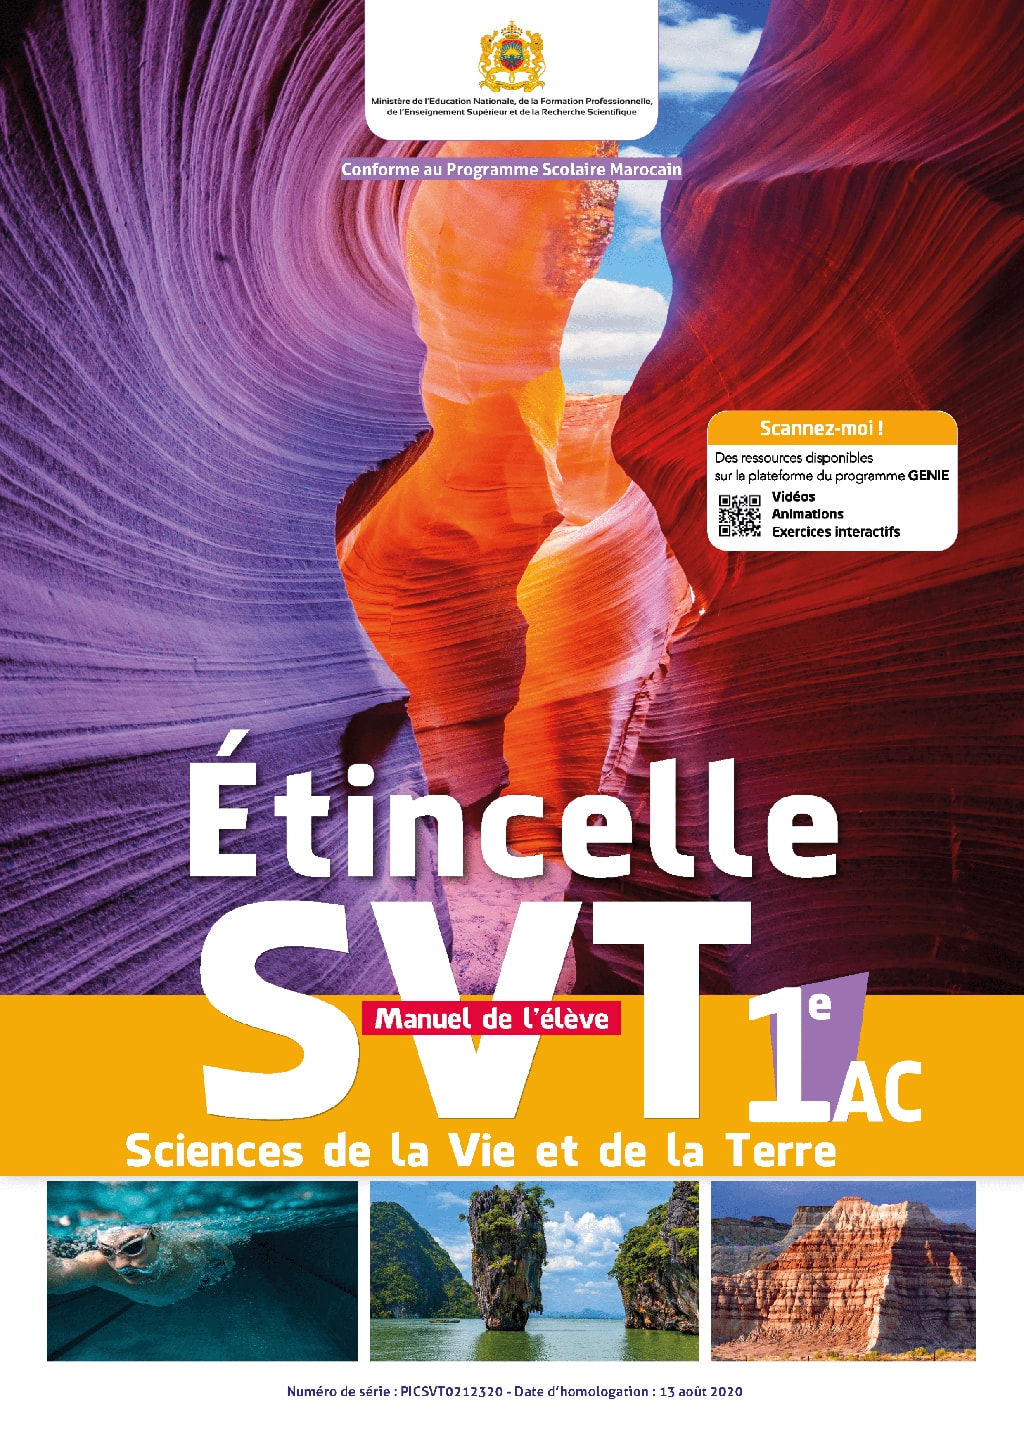 Etincelle SVT 1AC